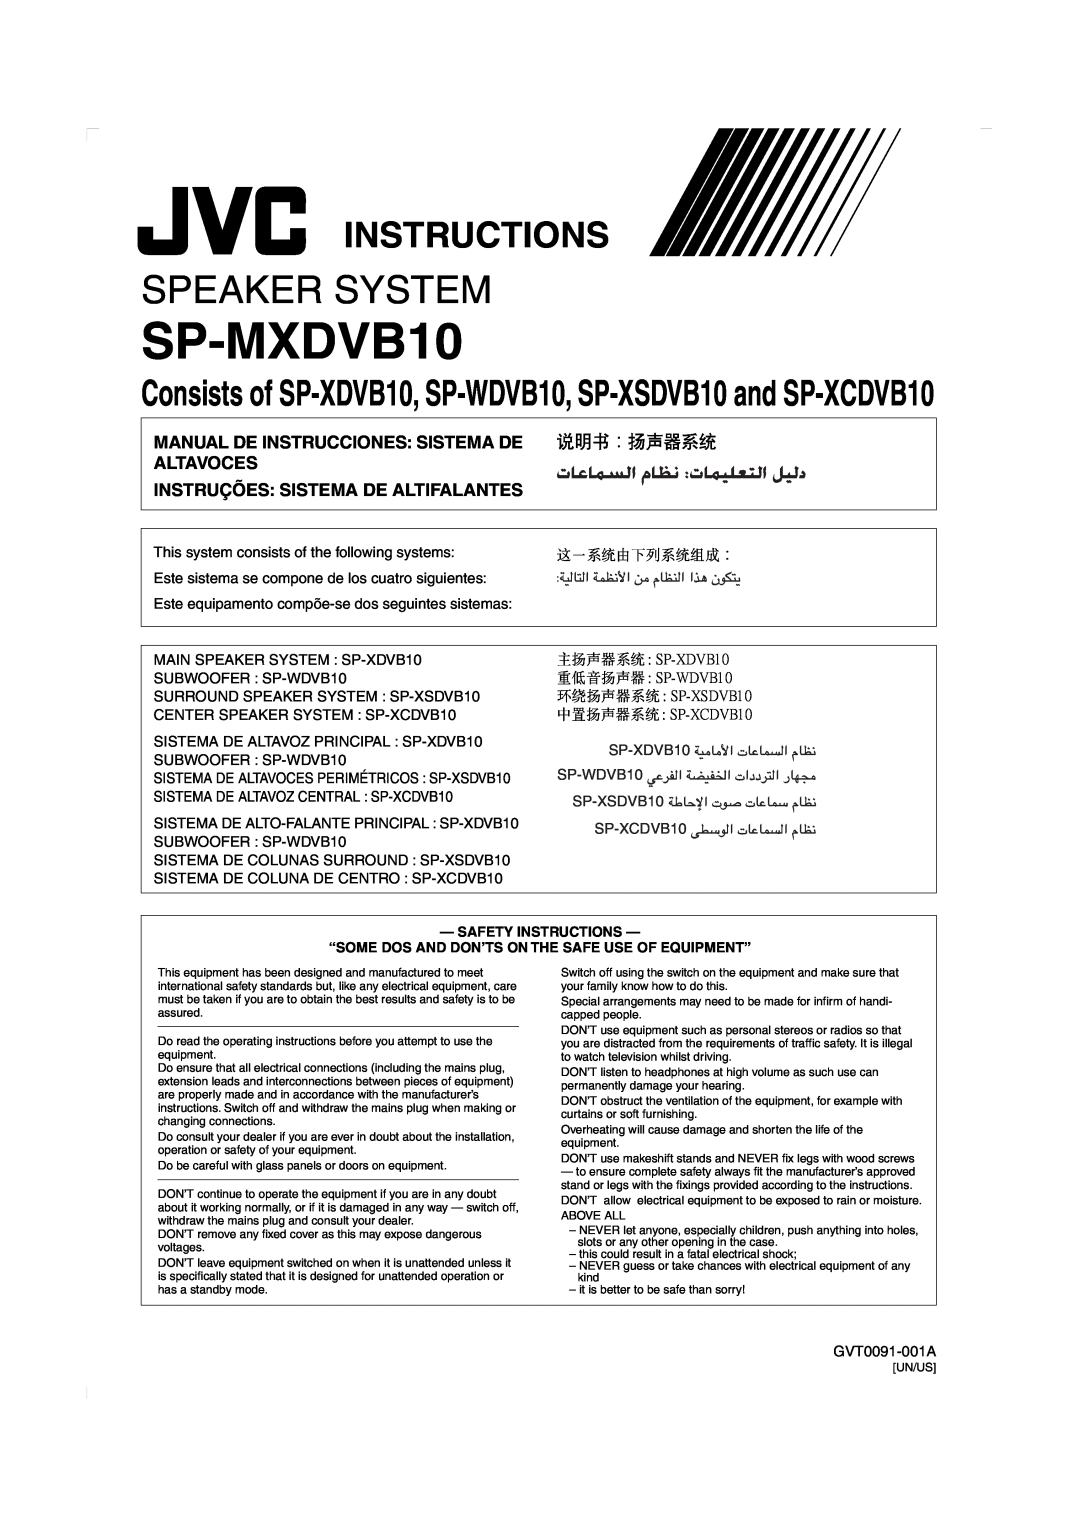 JVC CA-MXDVB10 Speaker System, Instructions, Manual De Instrucciones Sistema De Altavoces, SP-XDVB10 ﺔﻴﻣﺎﻣﻷا تﺎﻋﺎﻤﺴﻟا مﺎﻈﻧ 